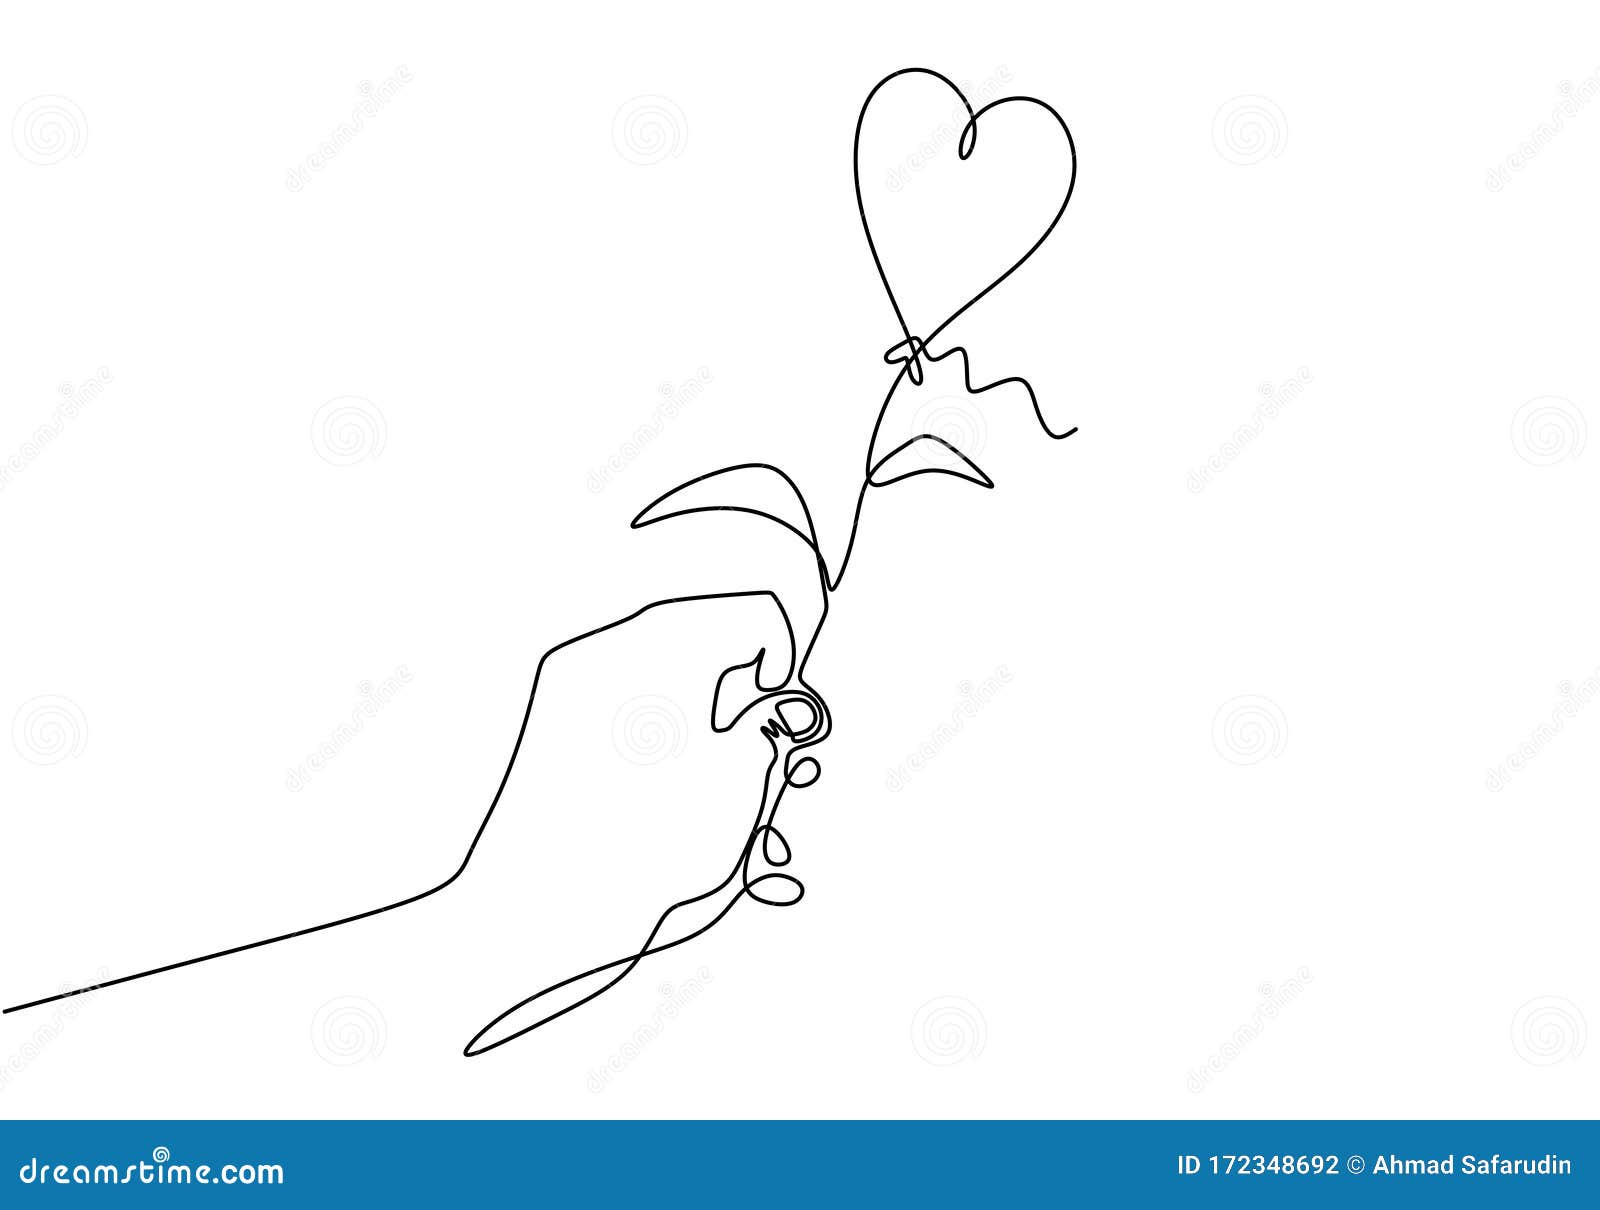 Heart Drawing Flower Stock Illustrations 42 786 Heart Drawing Flower Stock Illustrations Vectors Clipart Dreamstime